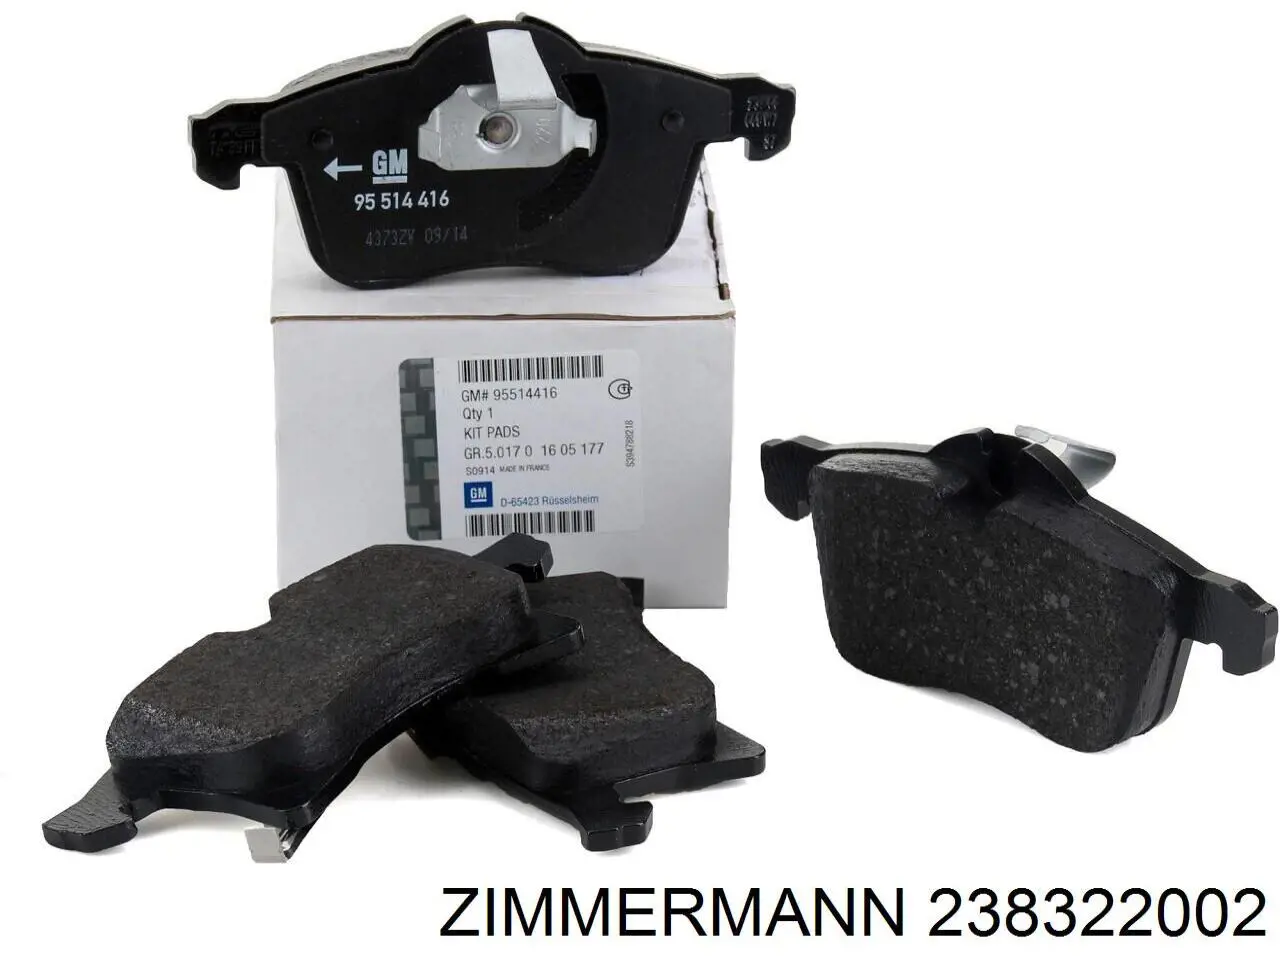 238322002 Zimmermann pastillas de freno delanteras